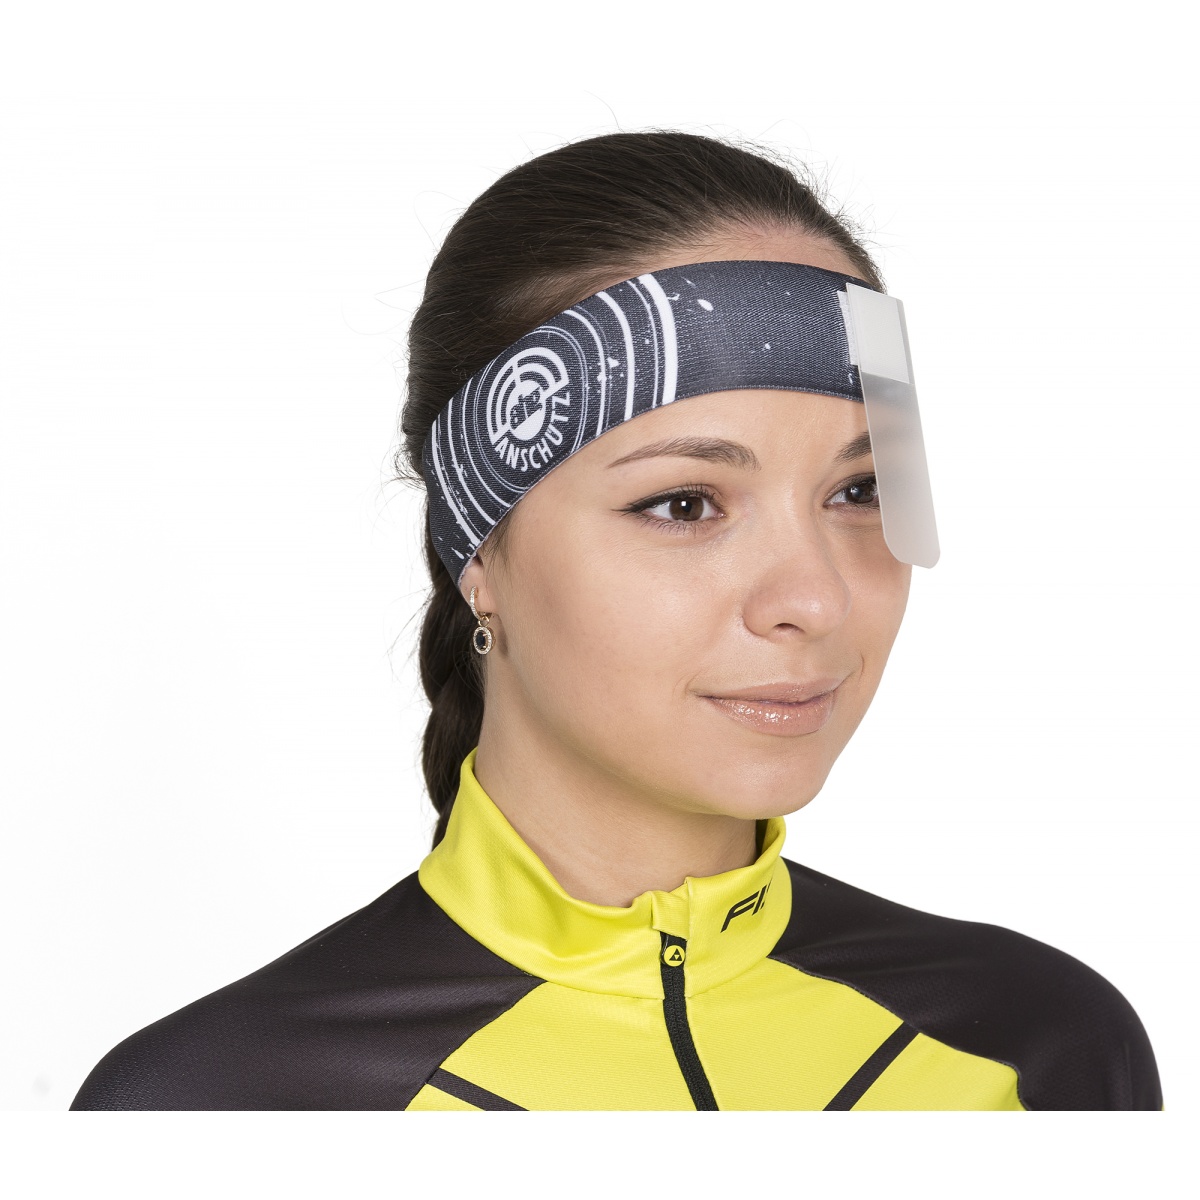 Headband with eyeshield (Anschutz)